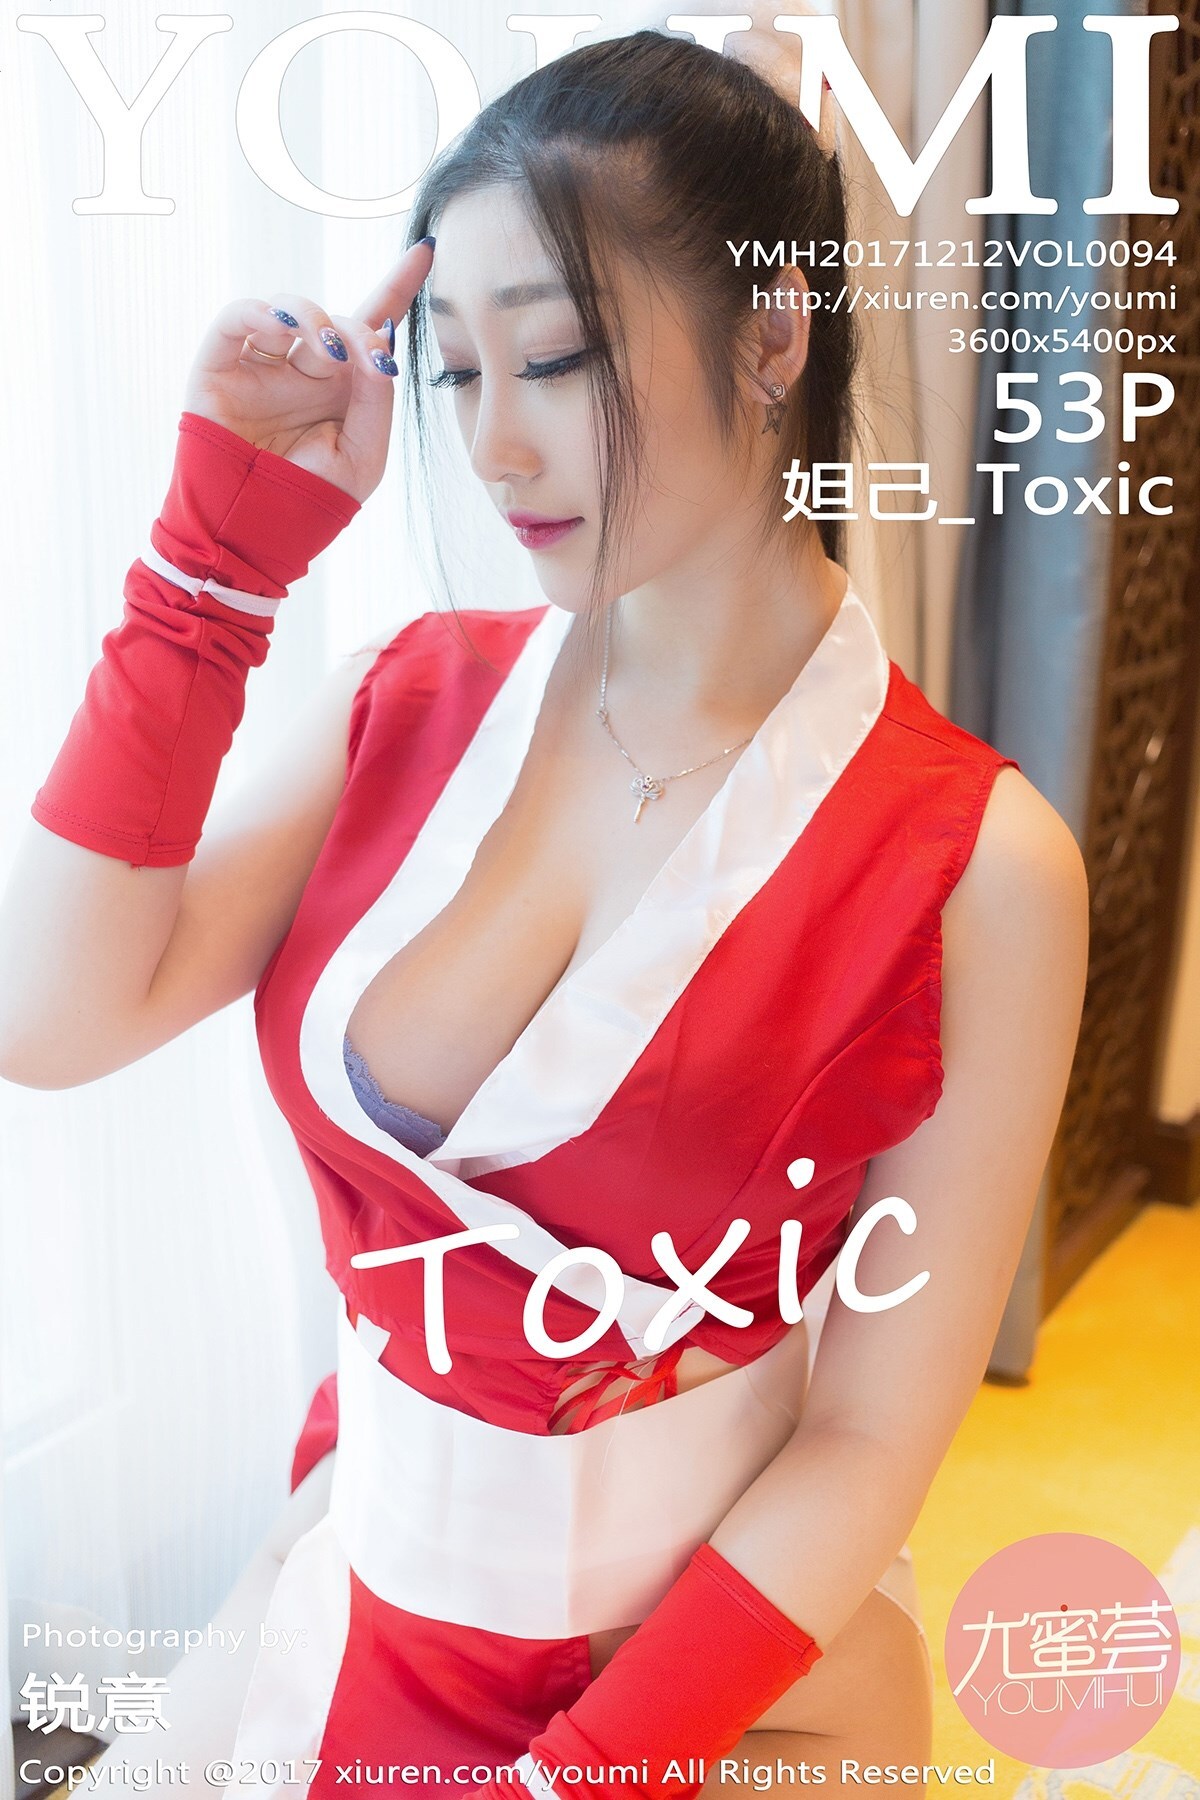 [youmi youmi] December 12, 2017 Vol.094 Taji toxic